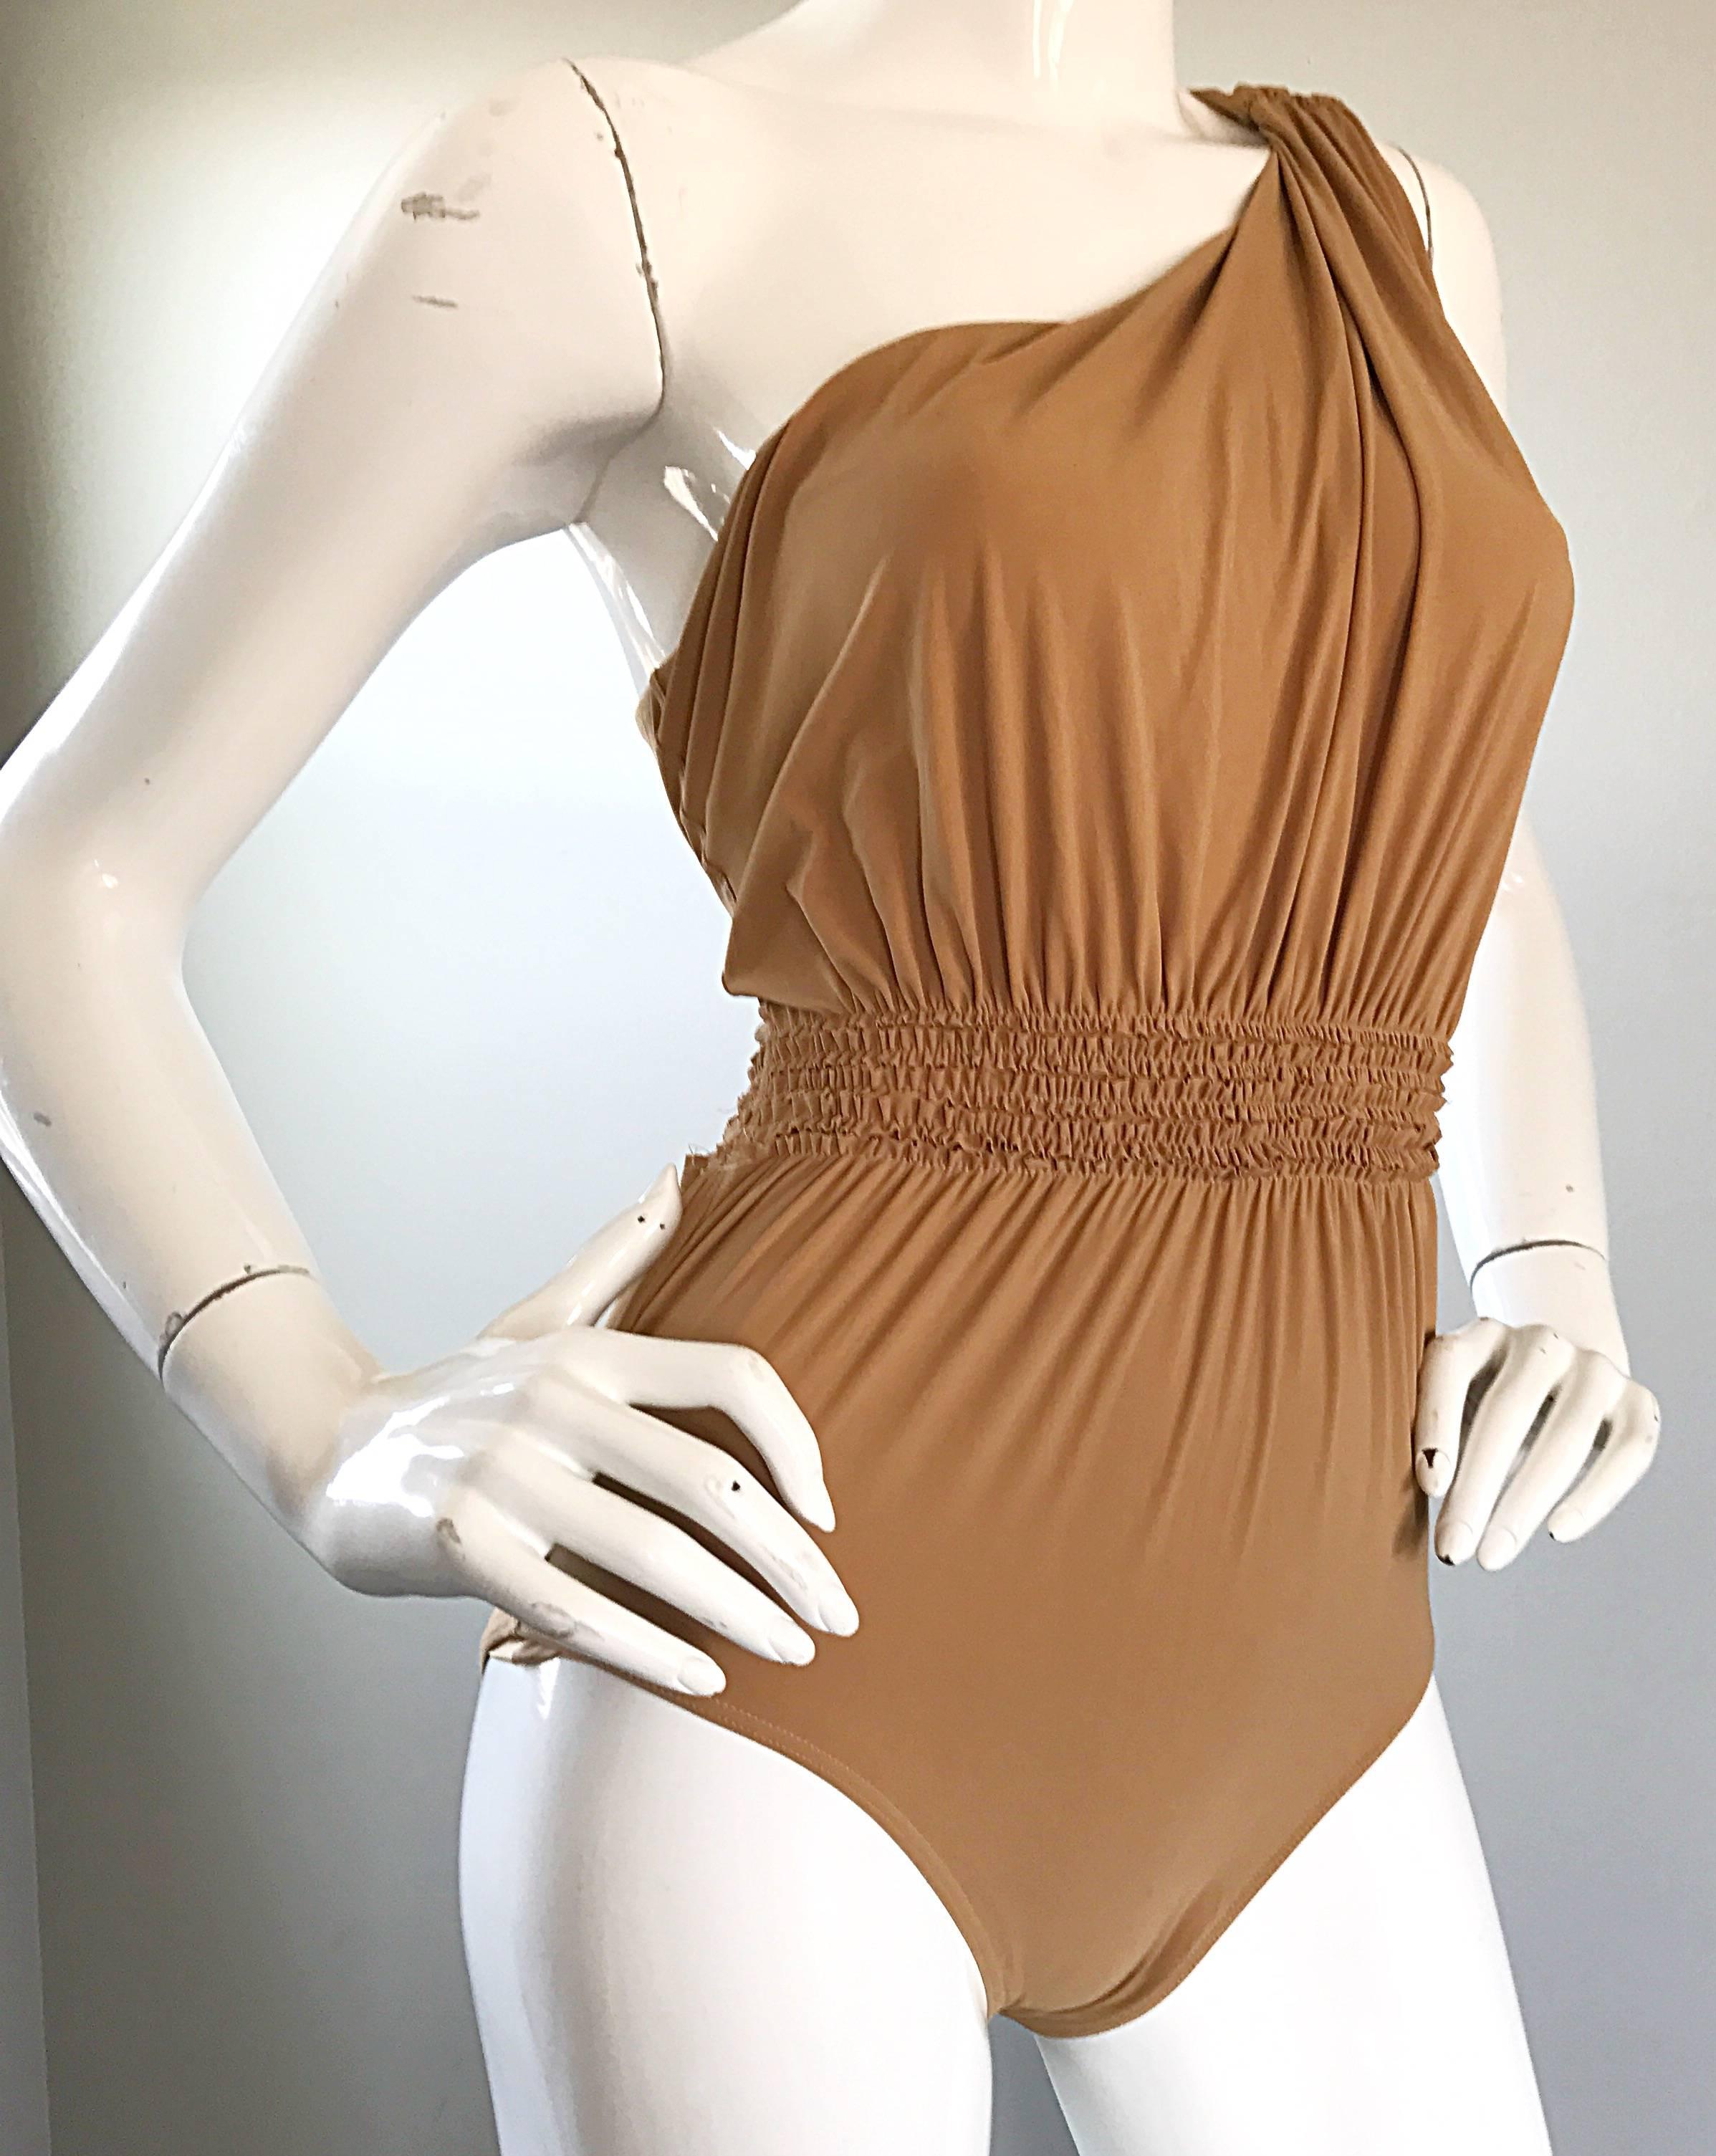 Lanvin 2011 Alber Elbaz Tan Caramel One Shoulder Grecian Bodysuit or Swimsuit For Sale 2